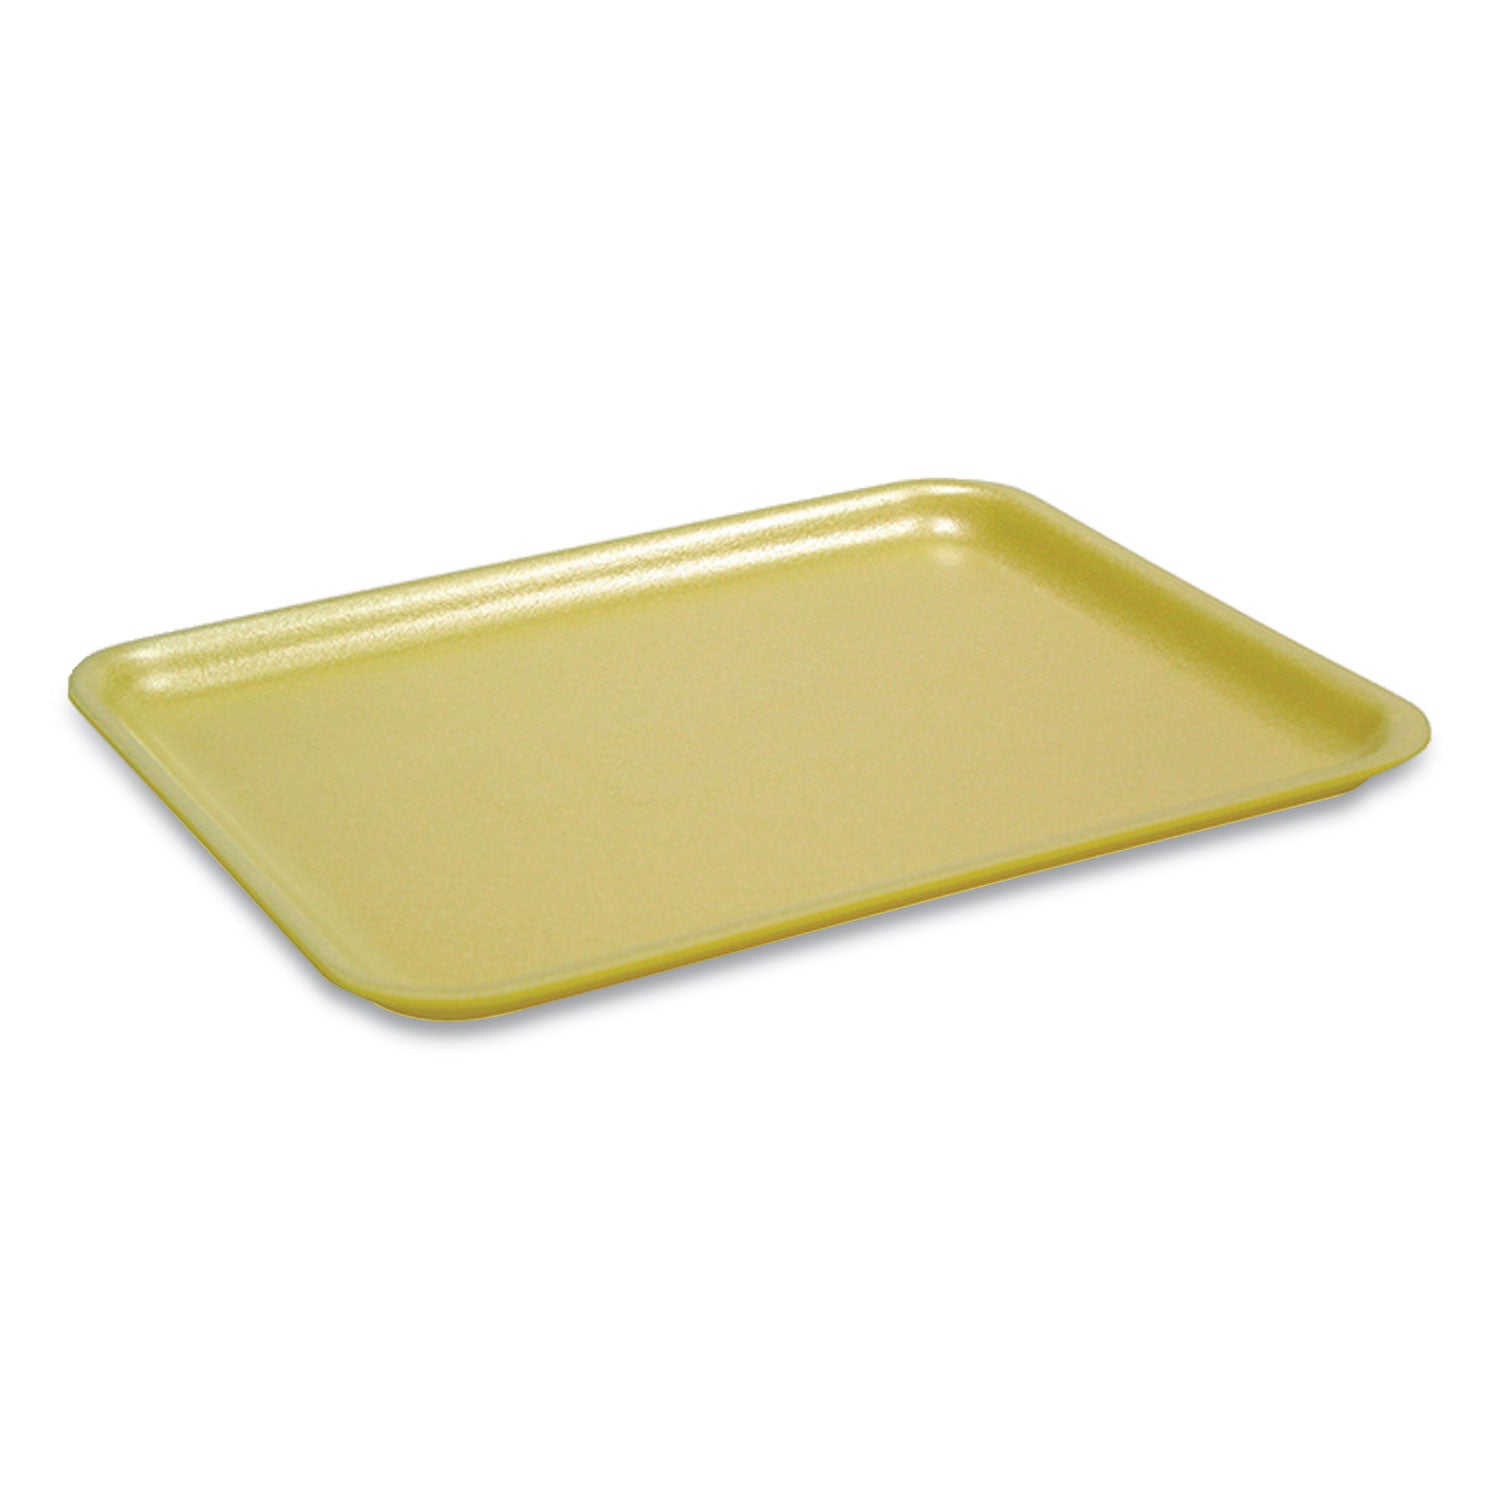 supermarket-tray-#2-838-x-588-x-121-yellow-foam-500-carton_pct51p302 - 1